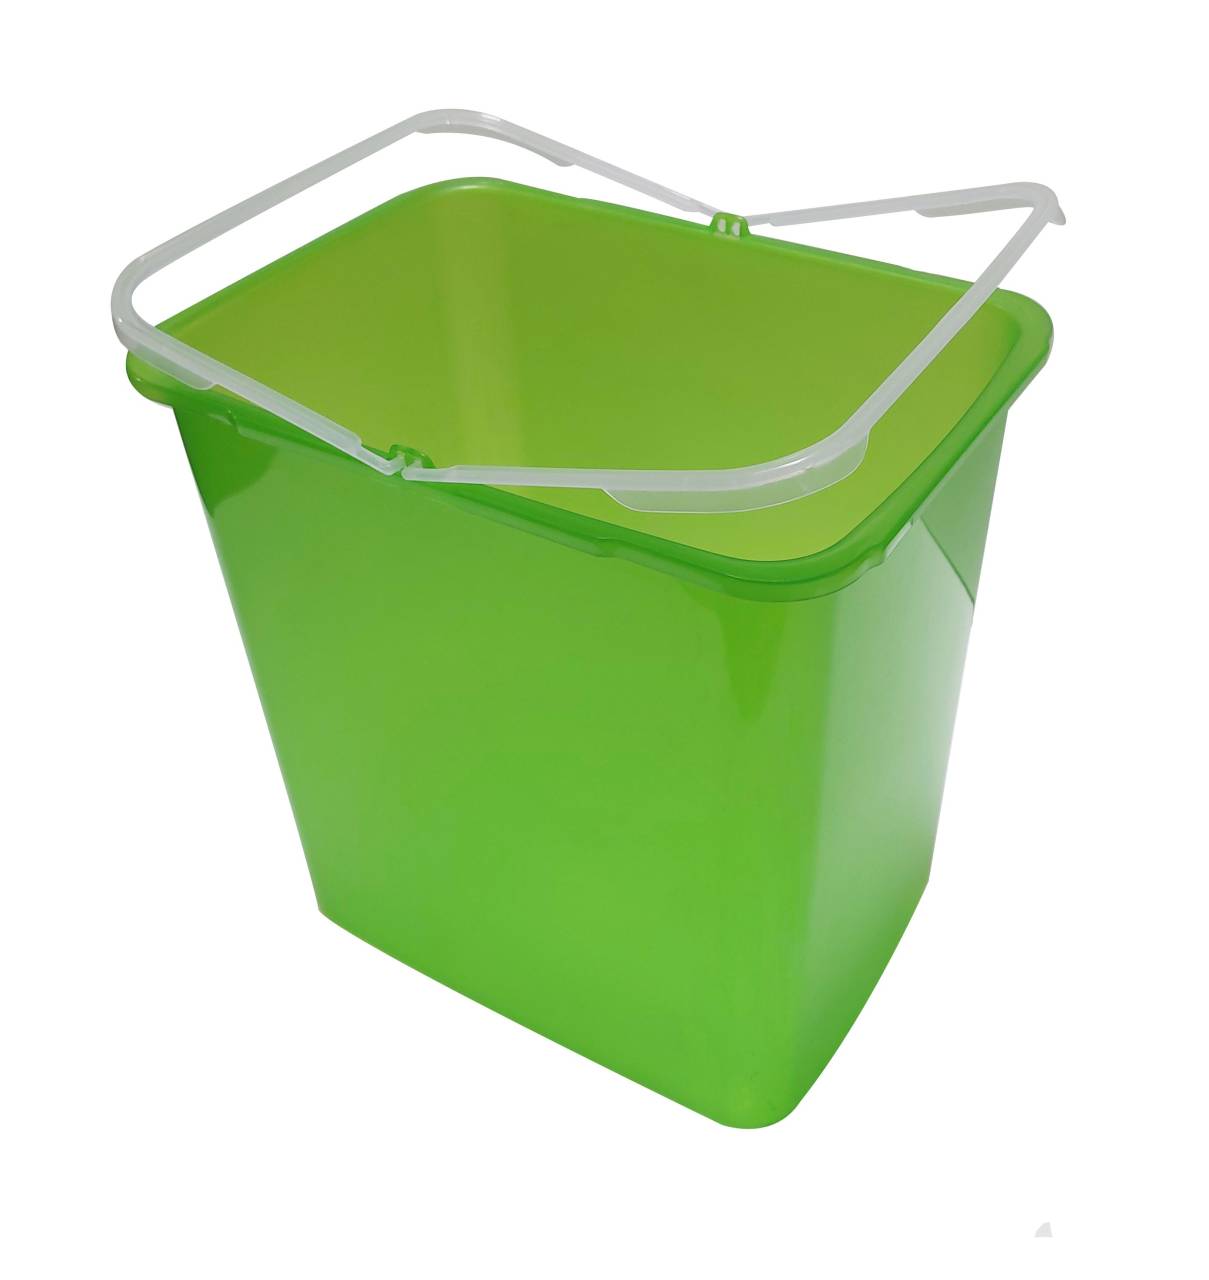 EKOTECH - Tartozék hulladékgyűjtőhöz 16 literes zöld vödör (MK)